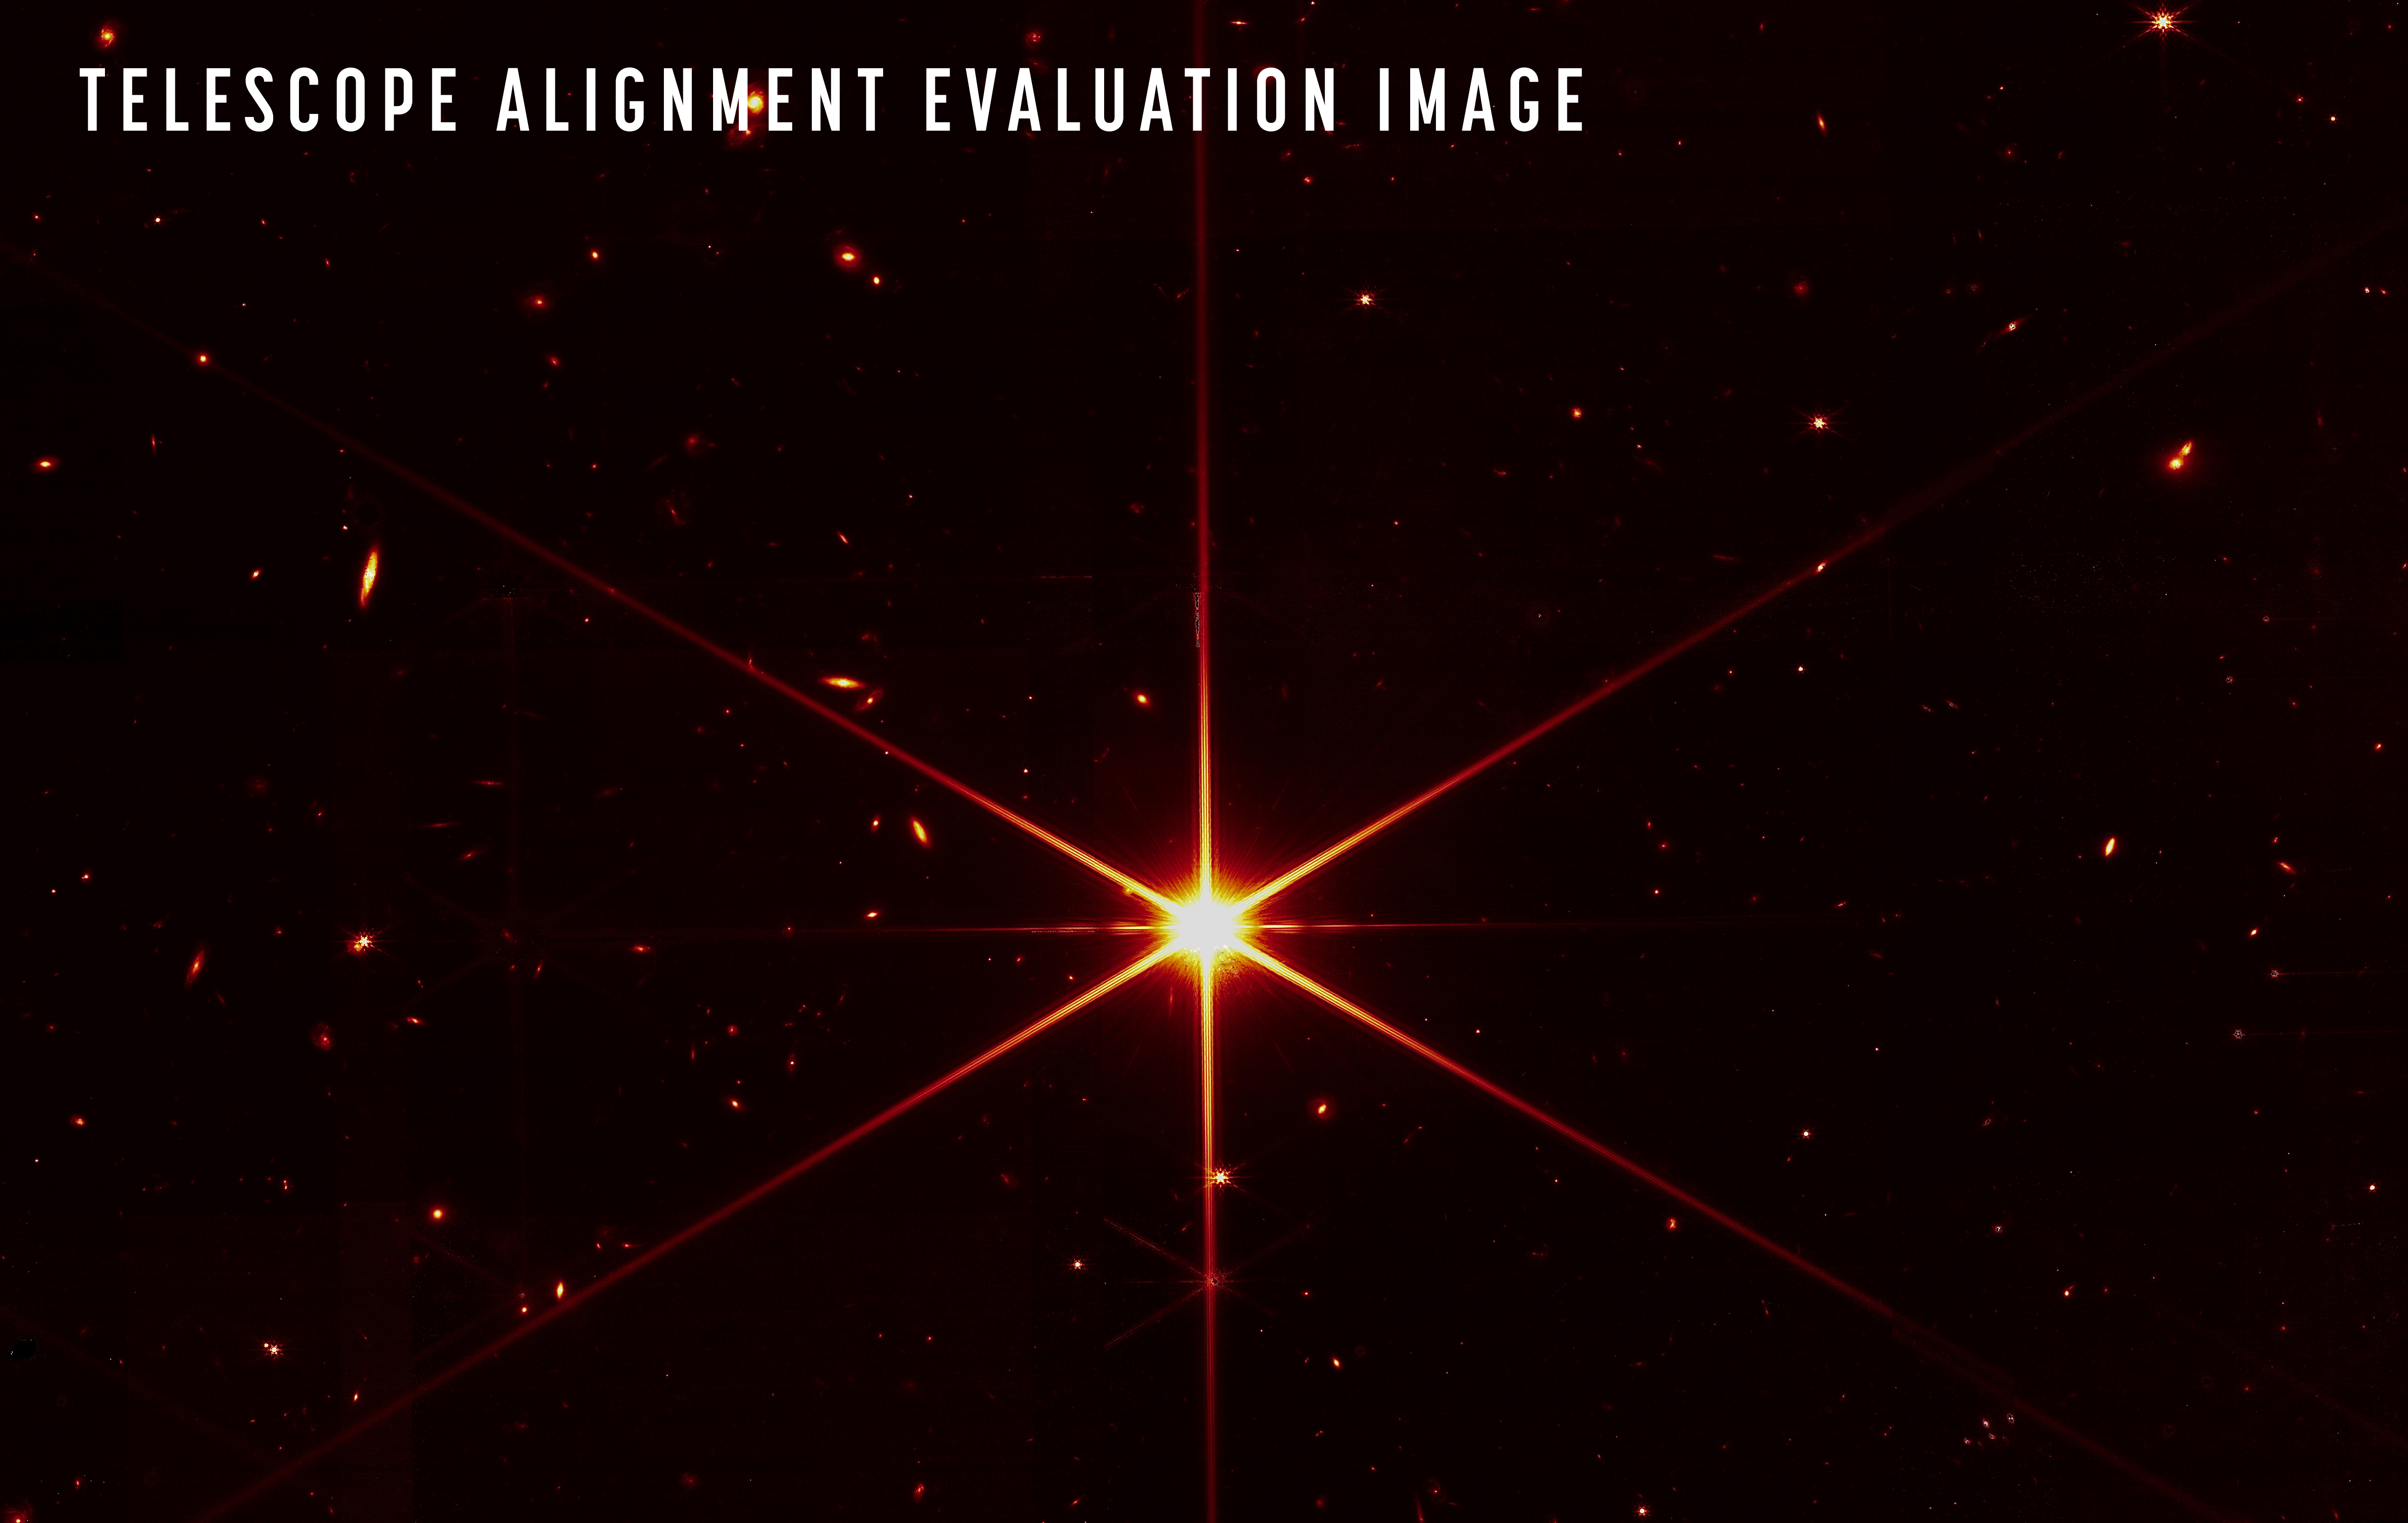 telescope_alignment_evaluation_image_labeled.jpg